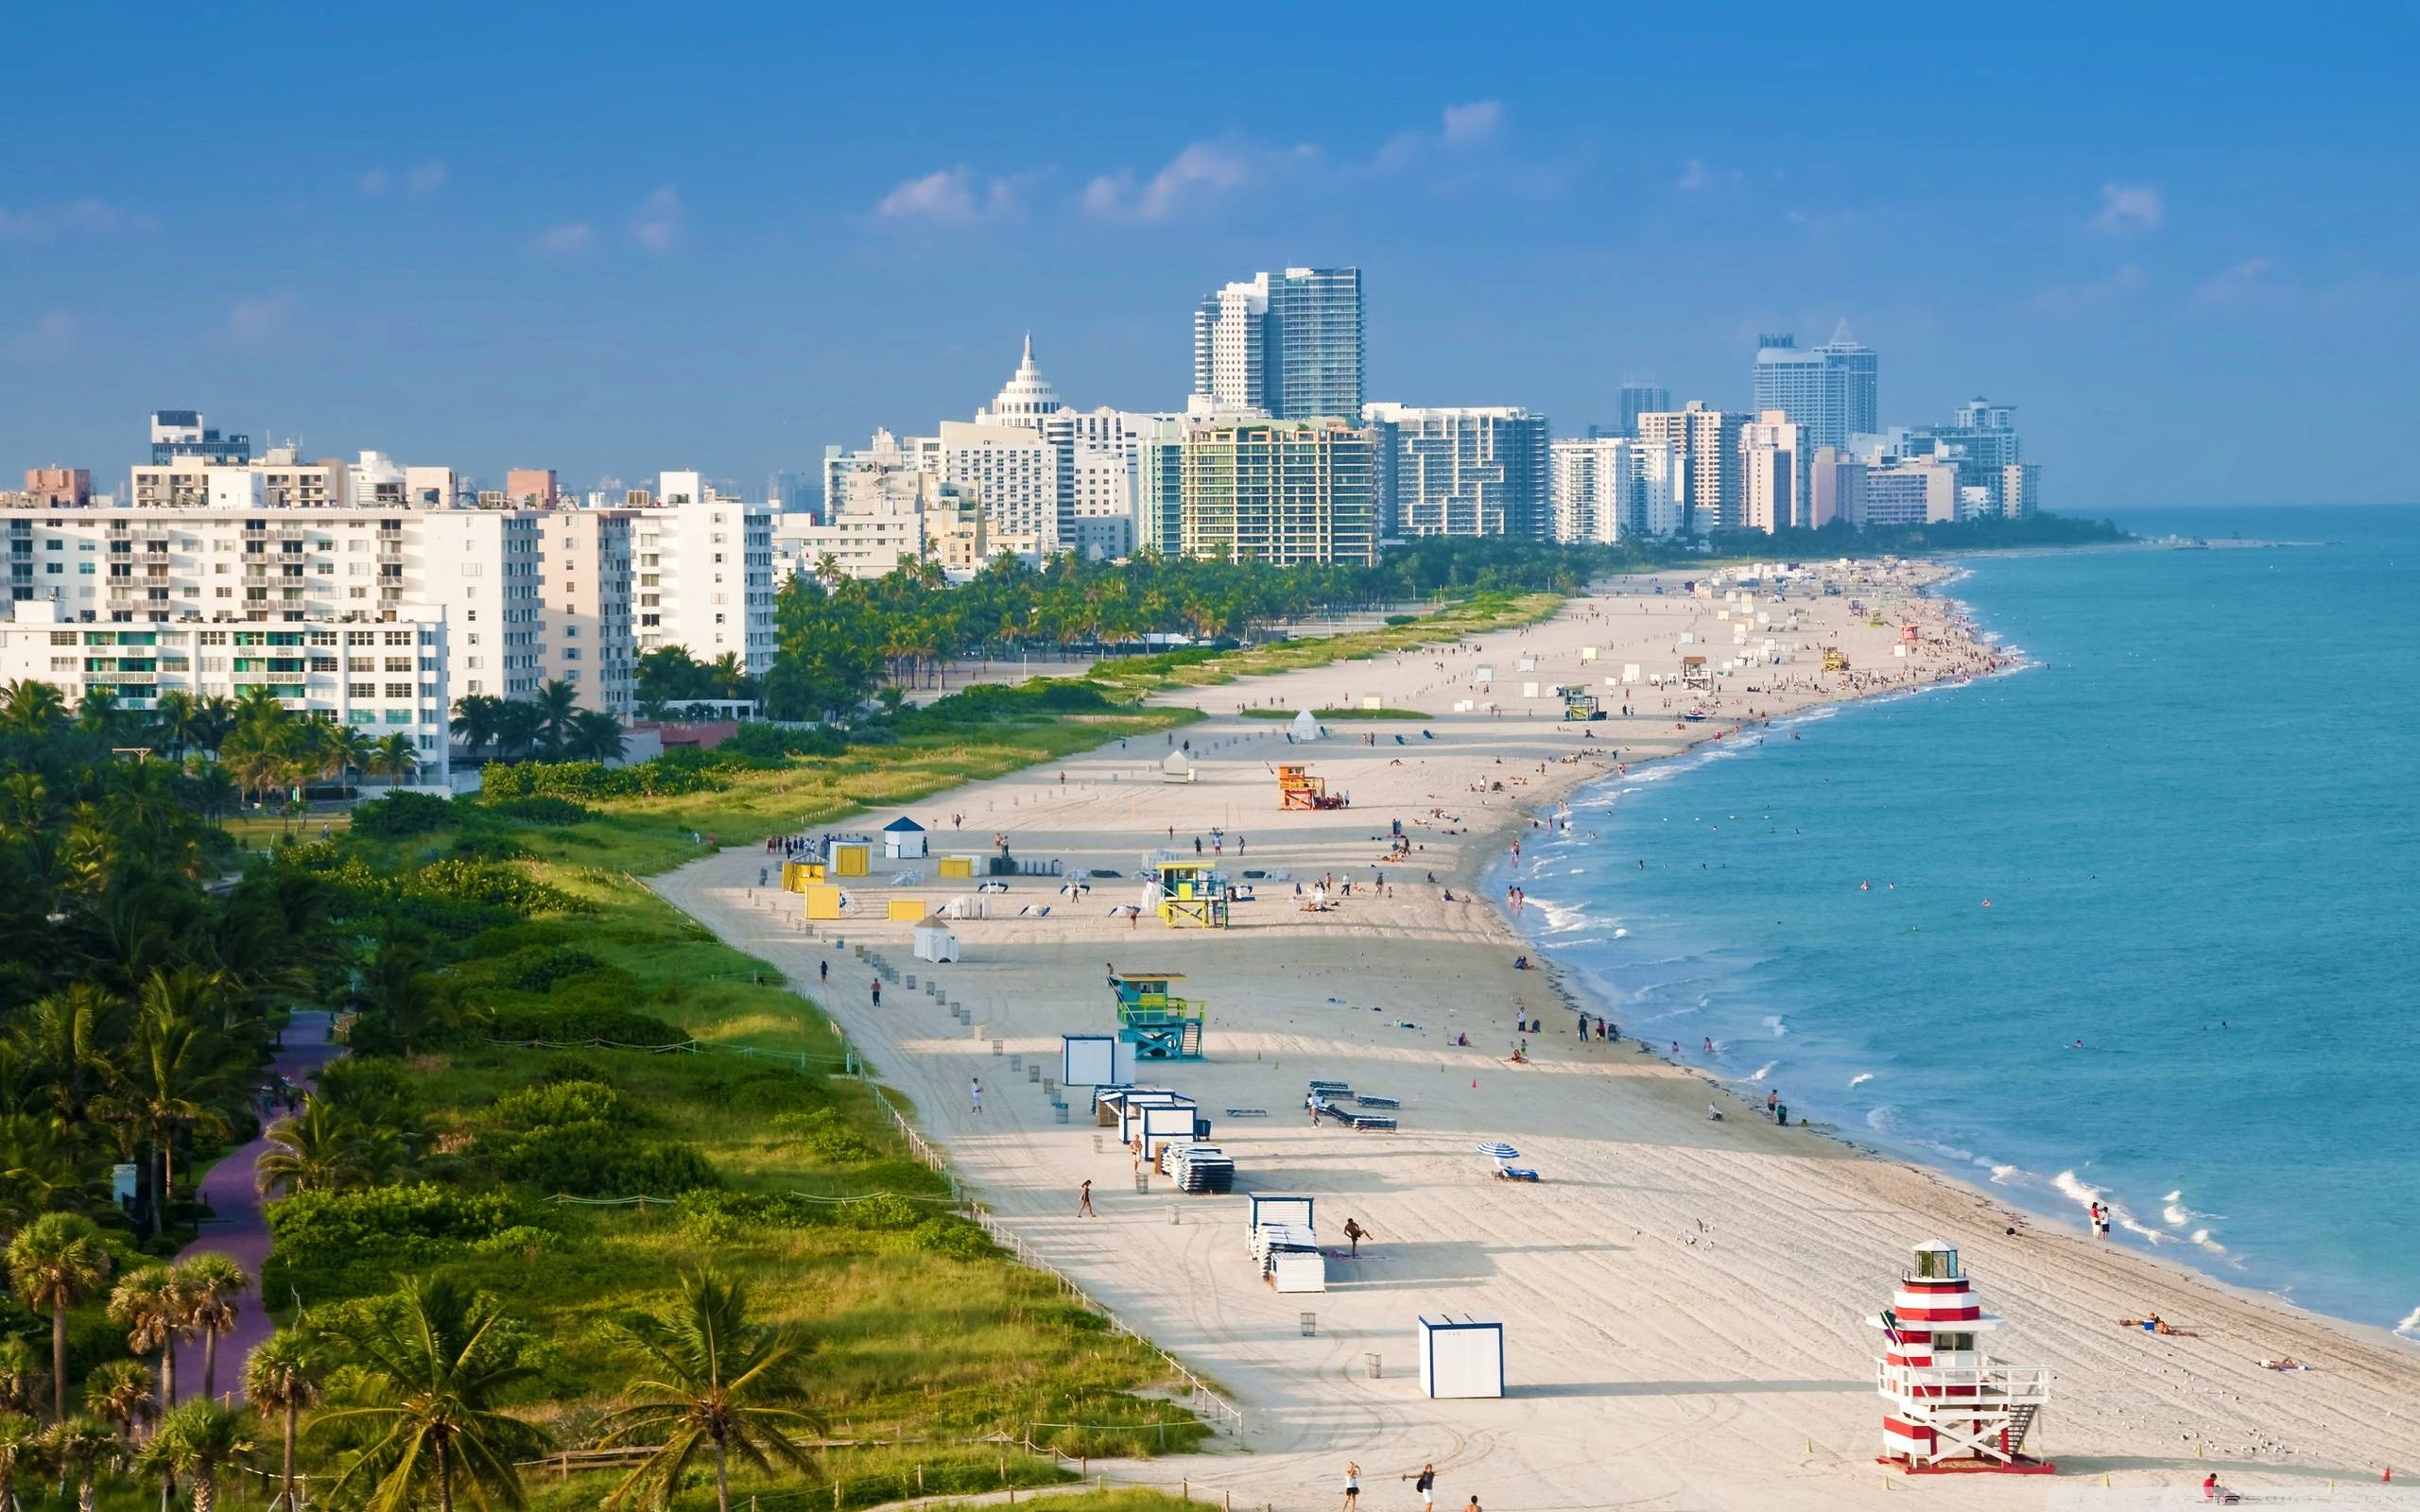 Florida: Miami Beach, connected by bridges to mainland Miami. 2560x1600 HD Wallpaper.